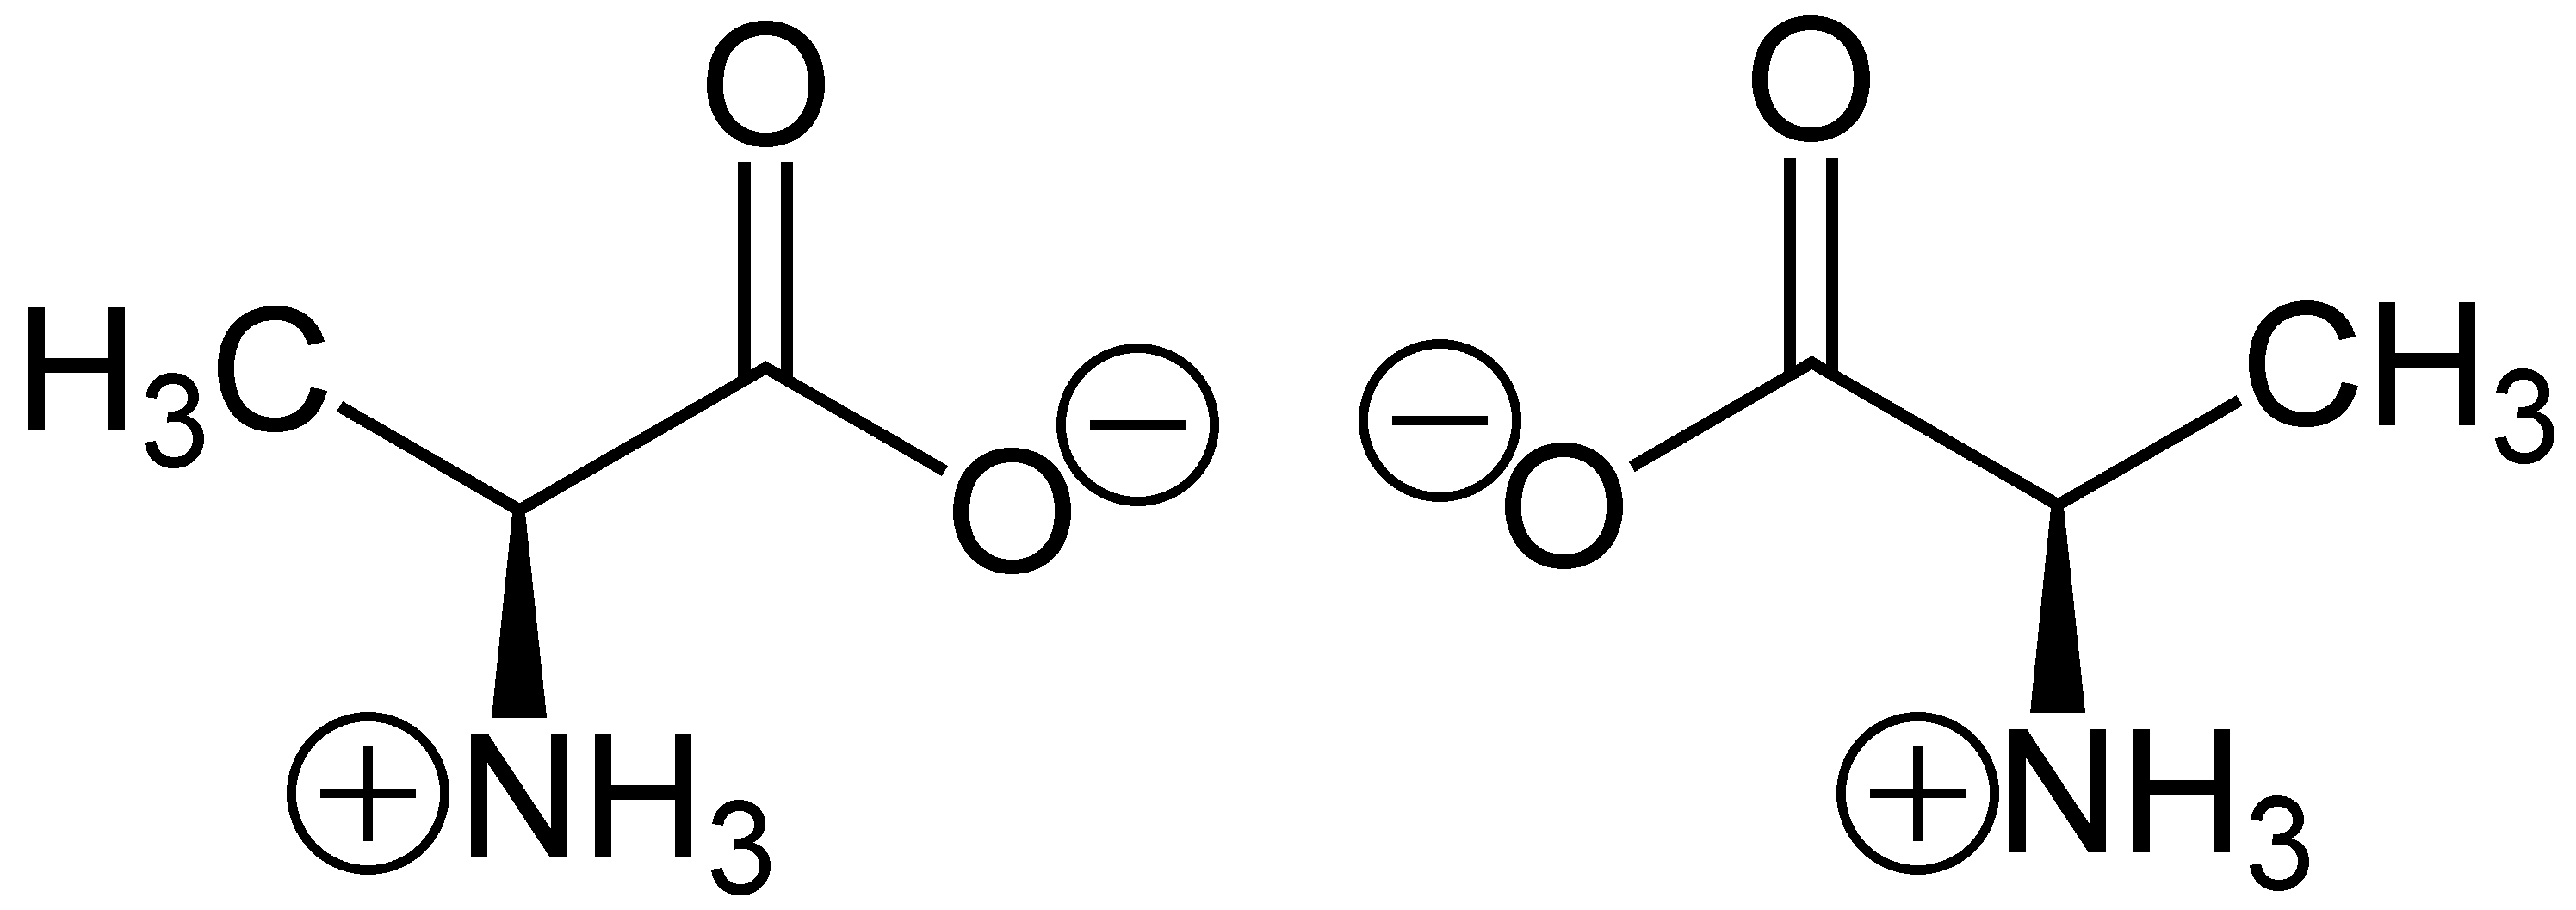 How Amino Acid Chirality Works